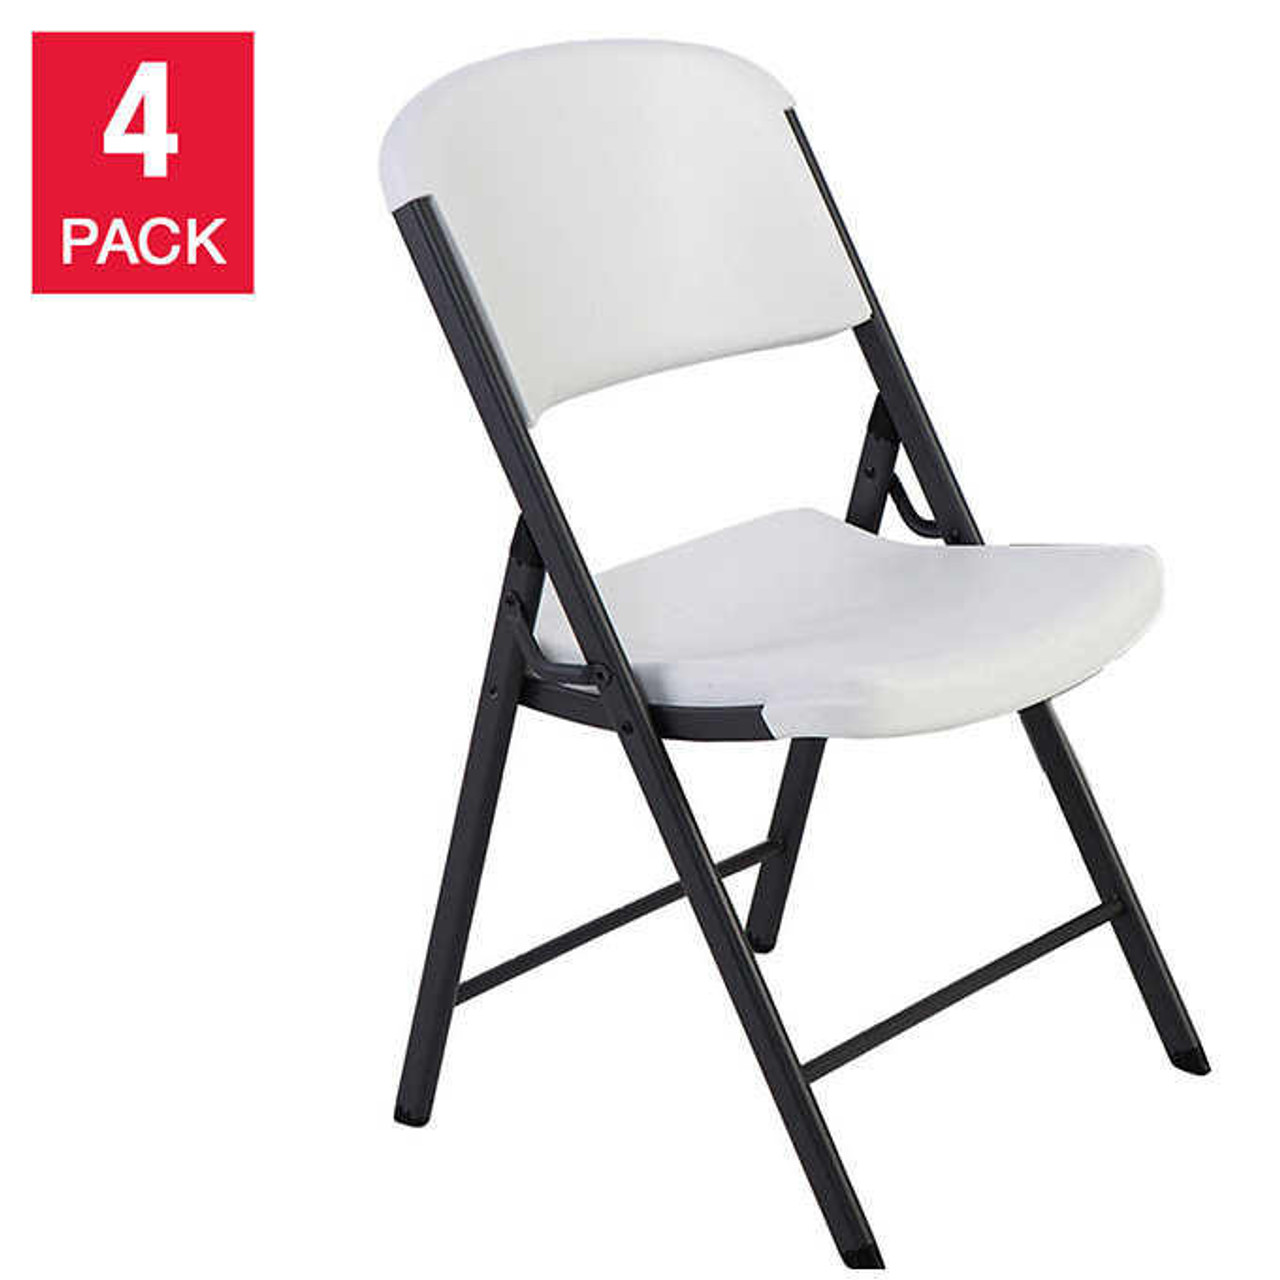 LIFETIME Lifetime Commercial Folding Chairs, 4-Pack - High-Impact Polyethylene 